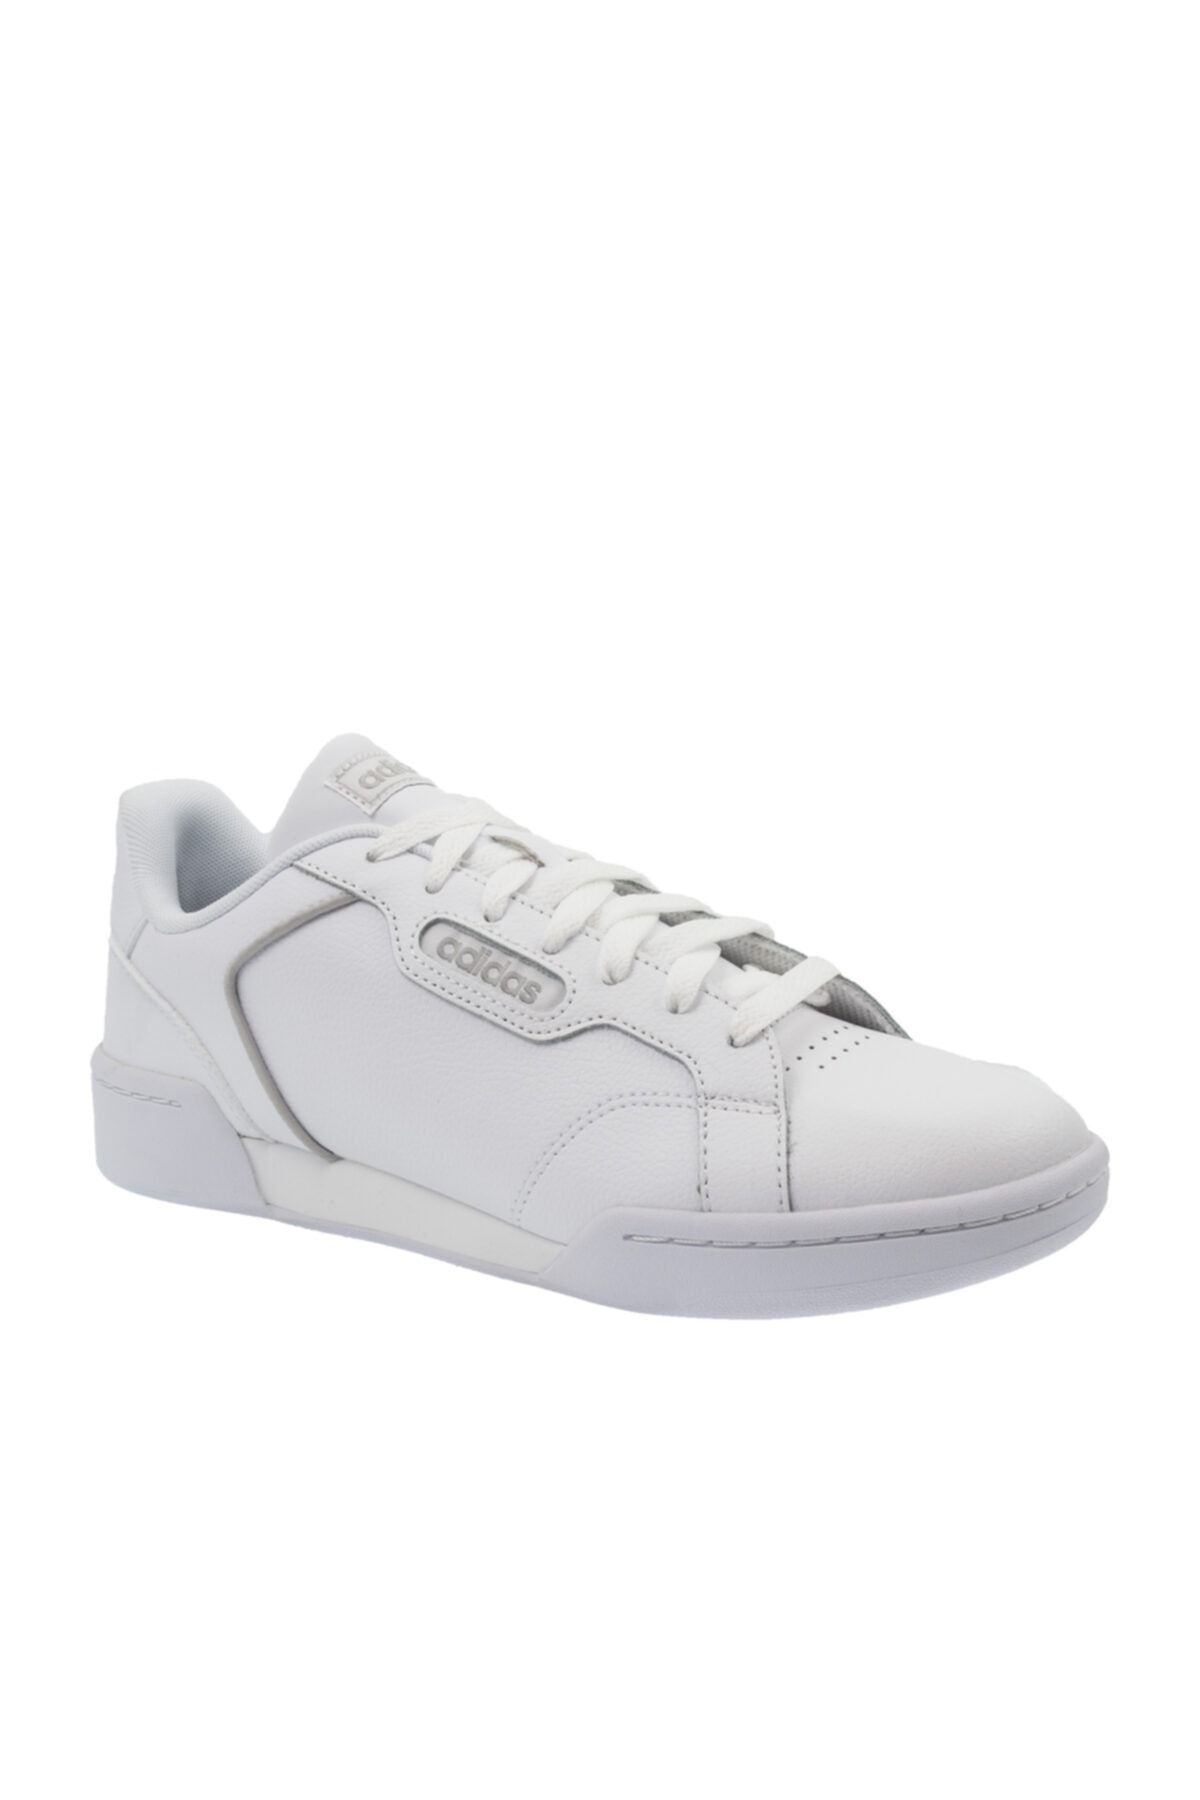 adidas ROGUERA Beyaz Erkek Sneaker Ayakkabı 100546331